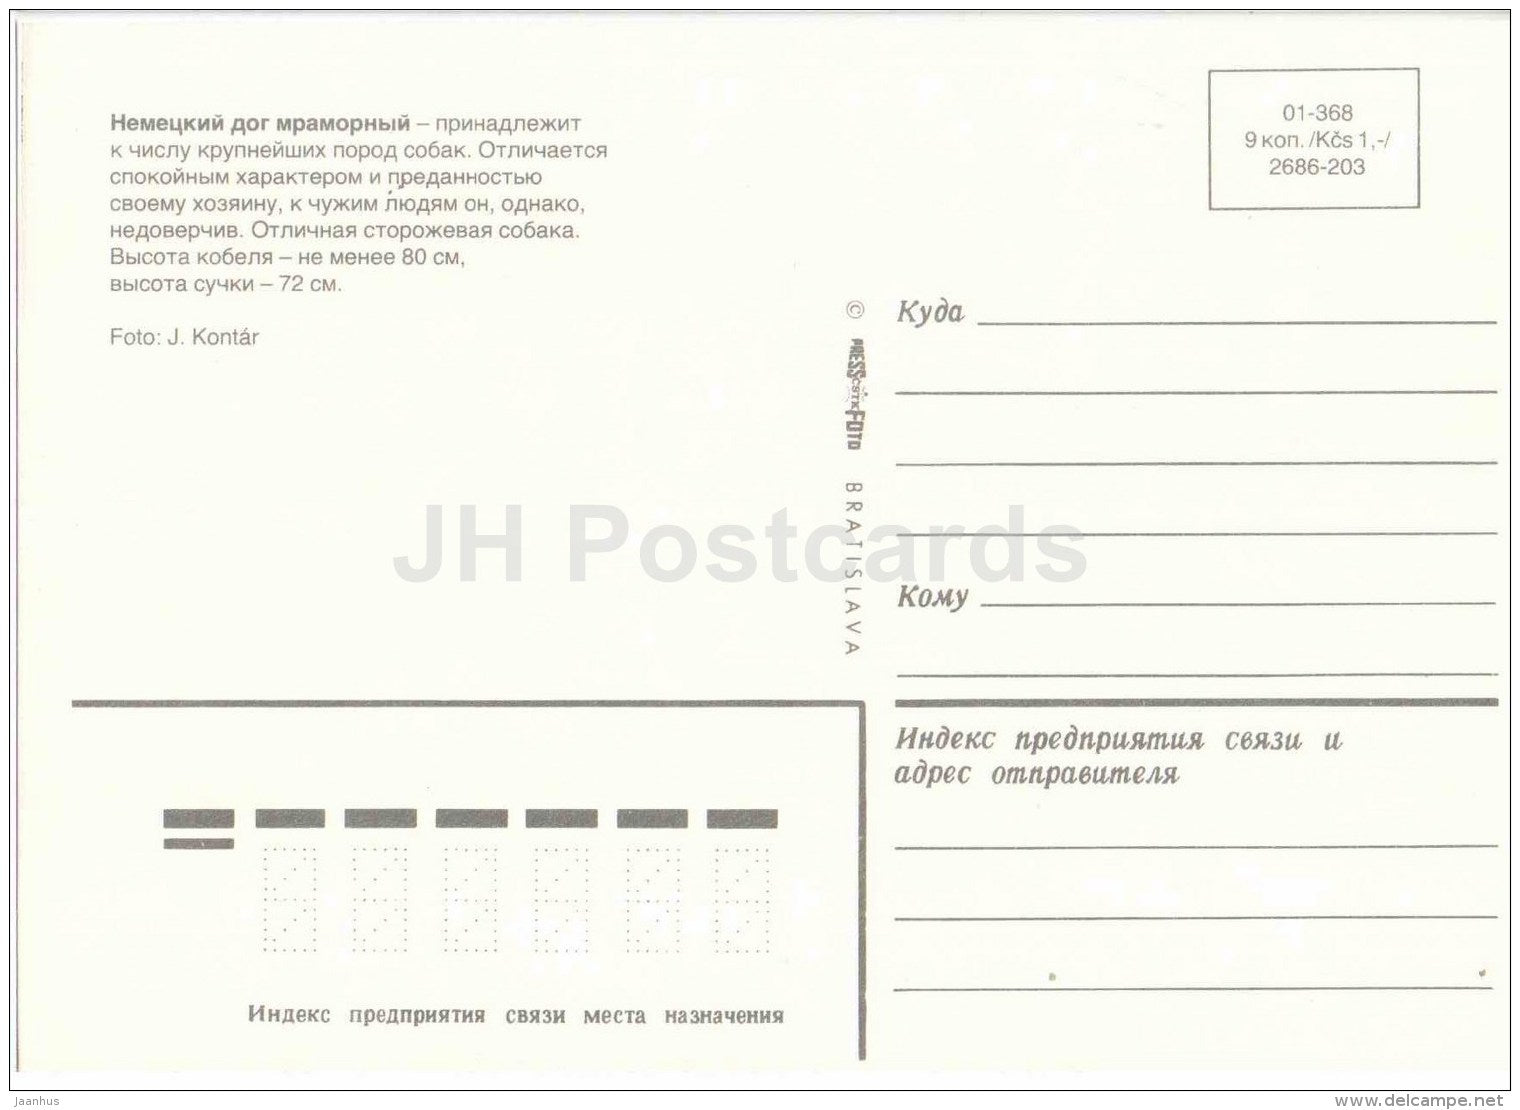 Great Dane - dog - Russia USSR - unused - JH Postcards